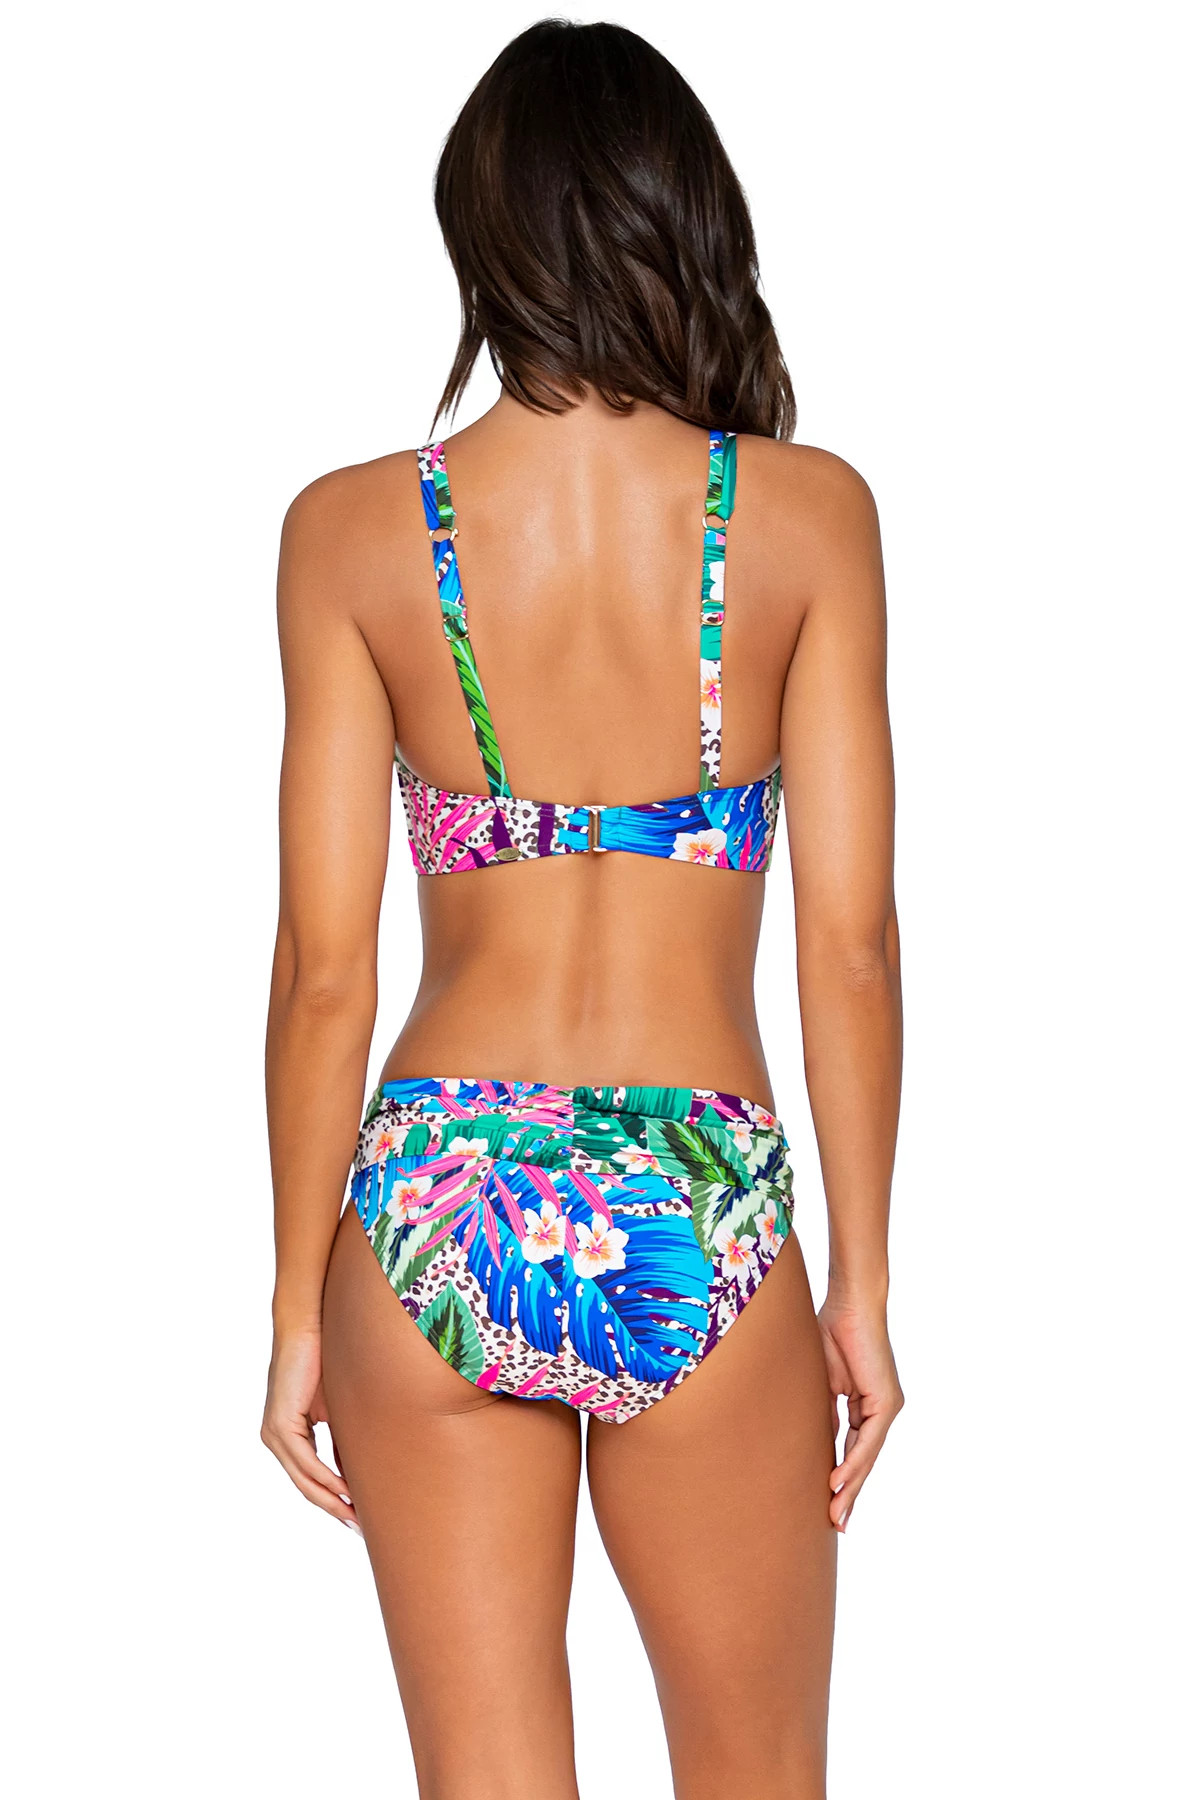 ISLAND SAFARI Taylor Underwire Bralette Bikini Top (D+ Cup) image number 2